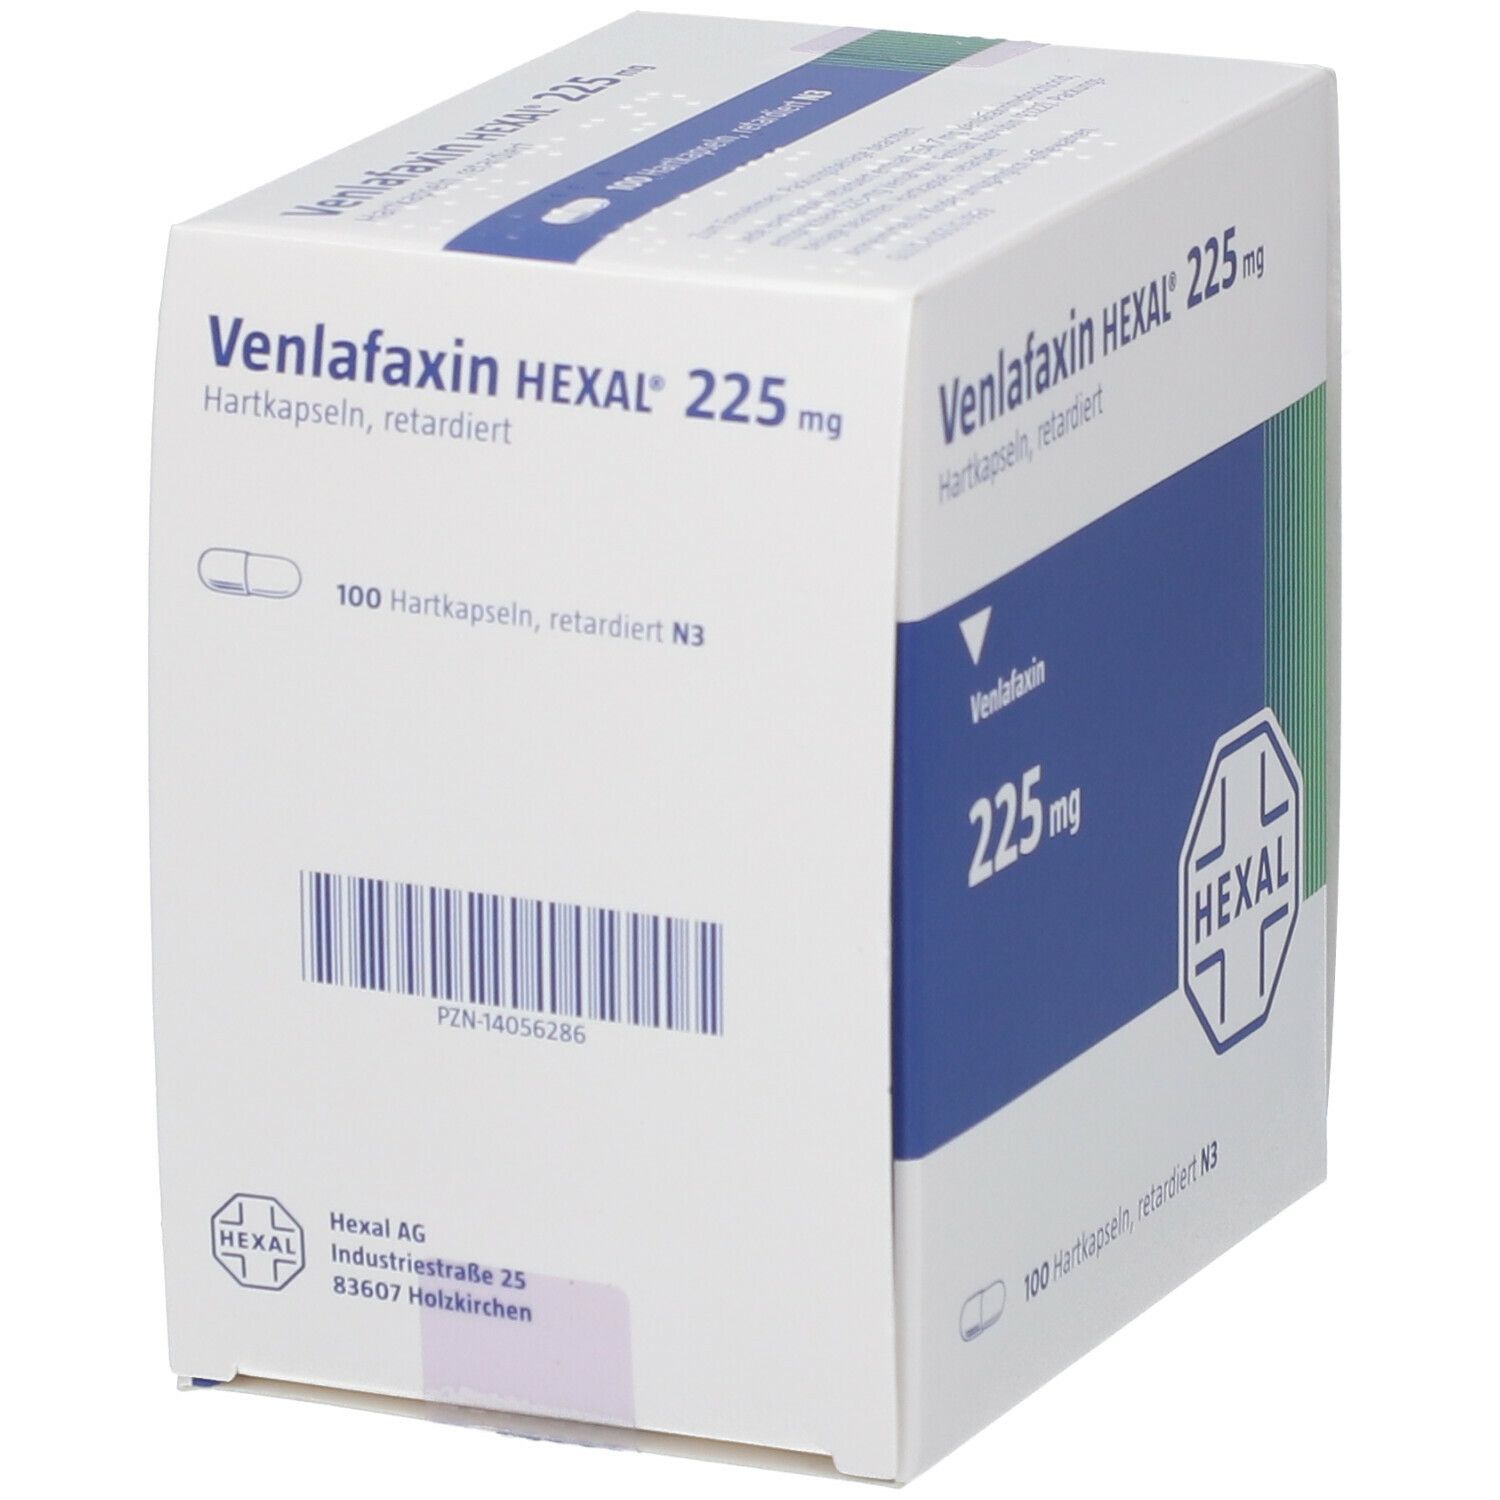 Venlafaxin HEXAL® 225 mg